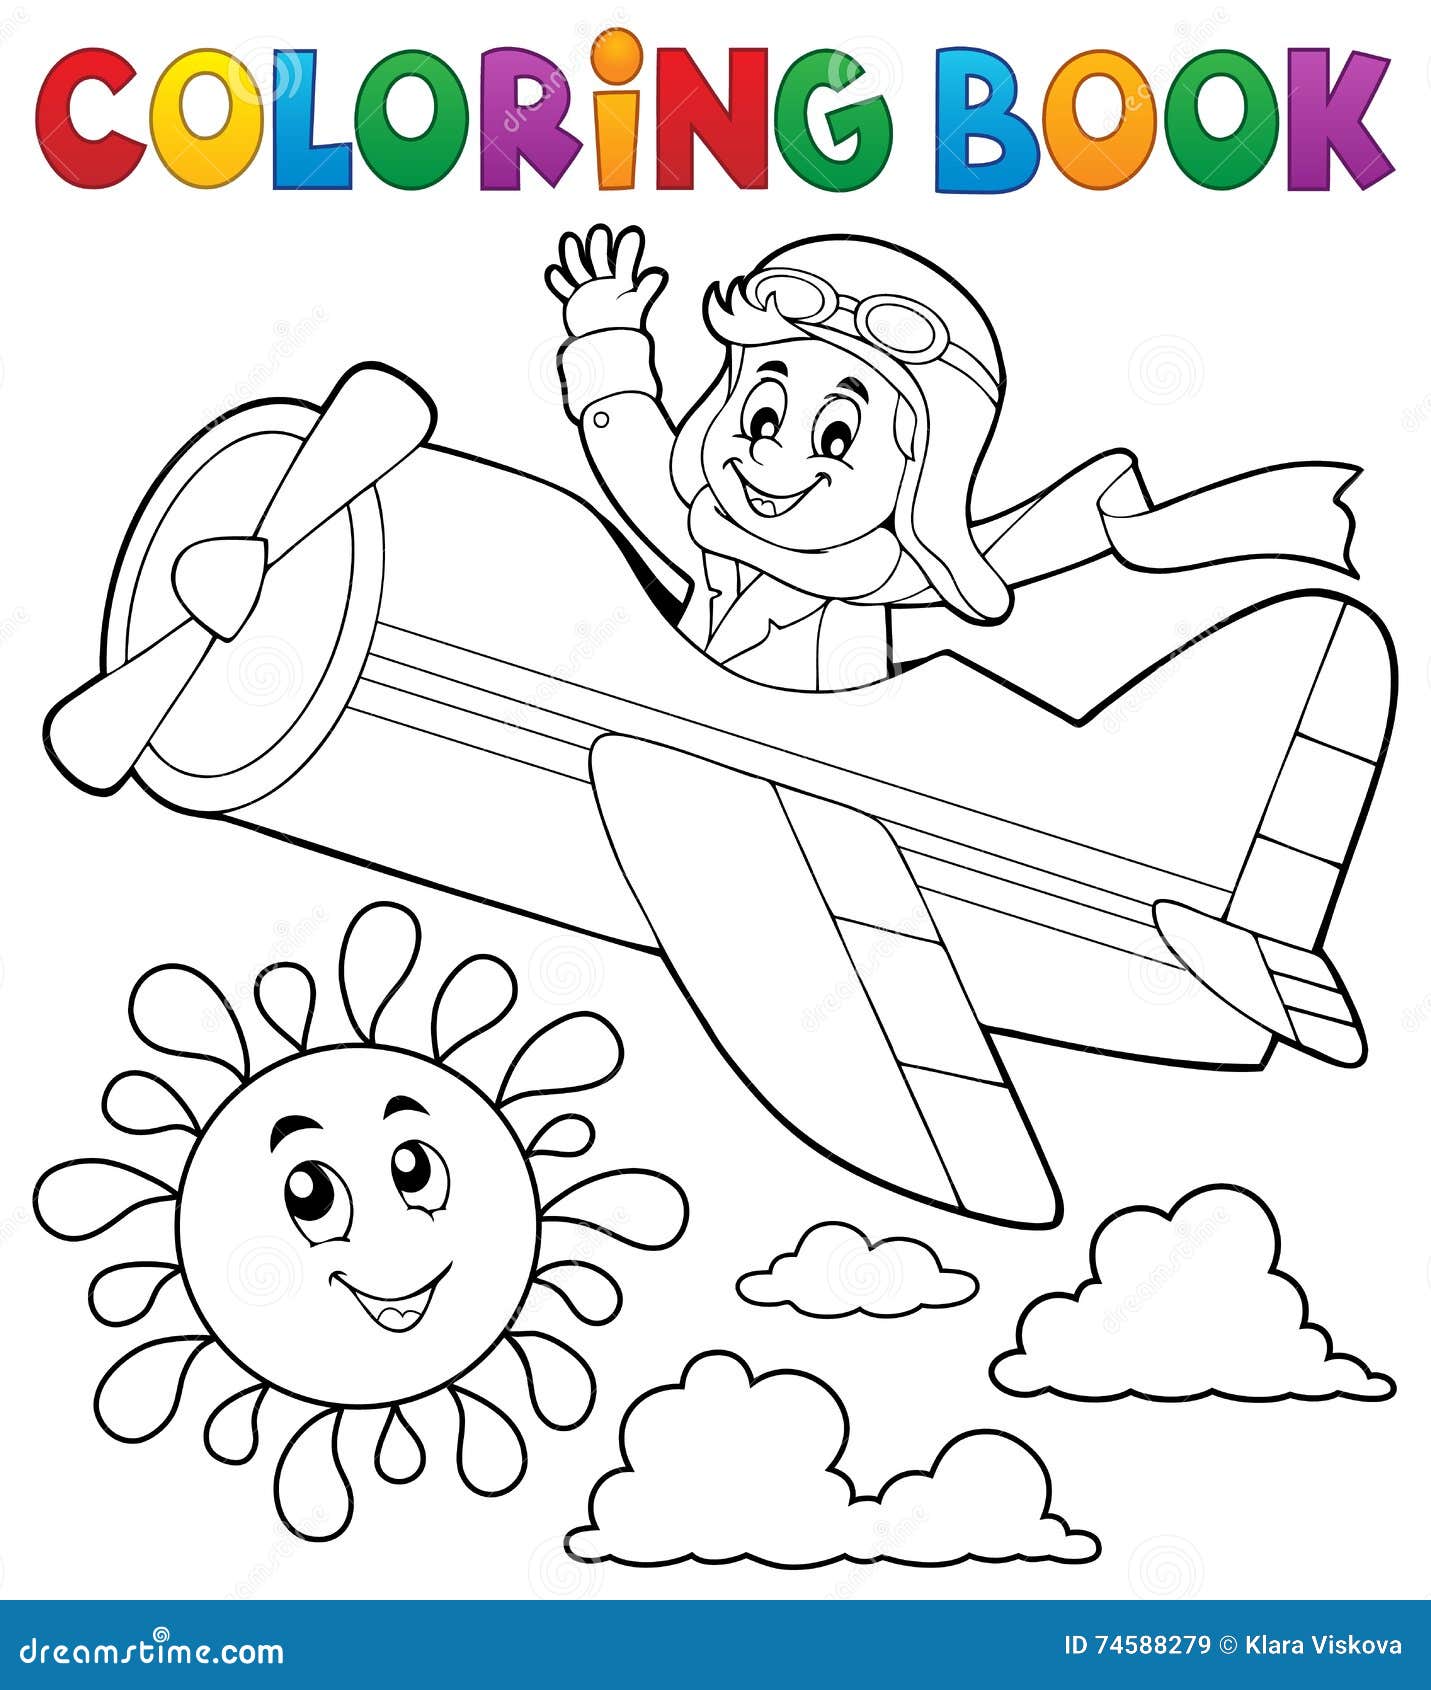 Download Coloring Book Pilot In Retro Airplane Stock Vector ...